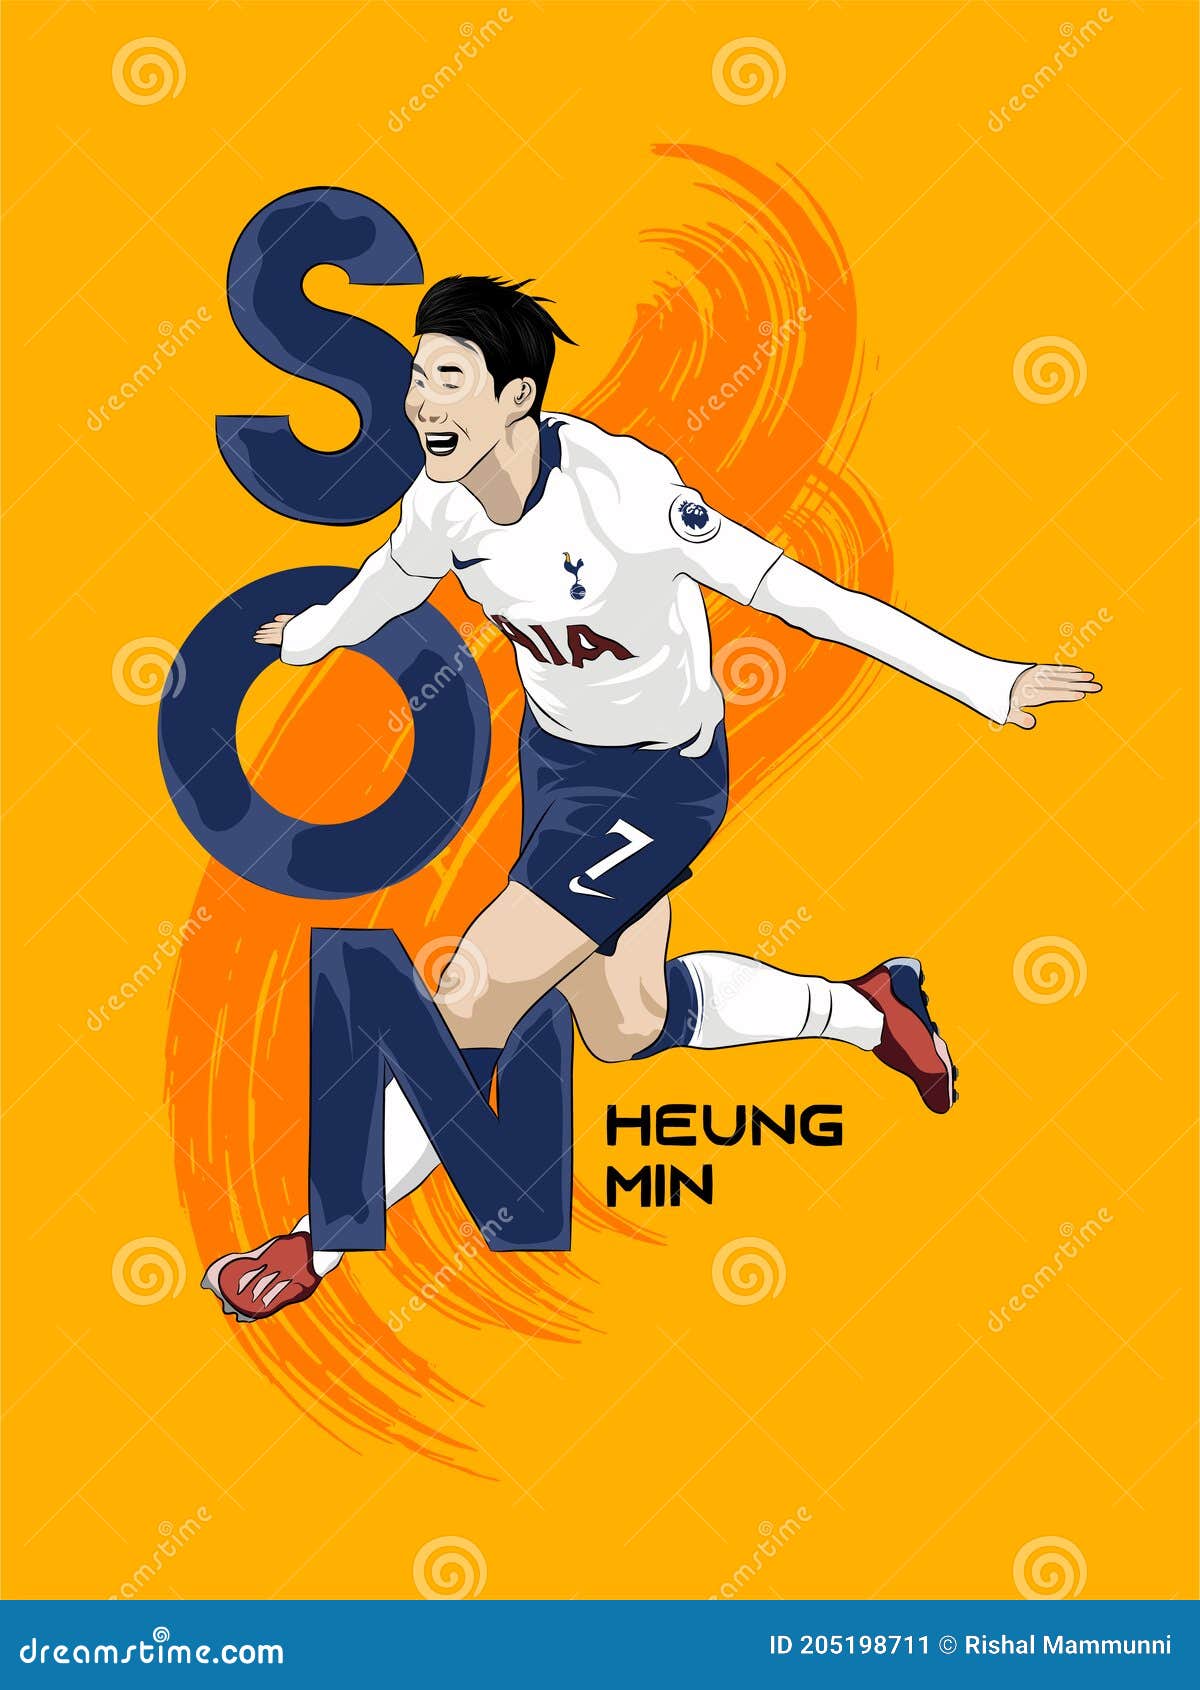 Son Heung-min Wallpaper.  Football players images, Football